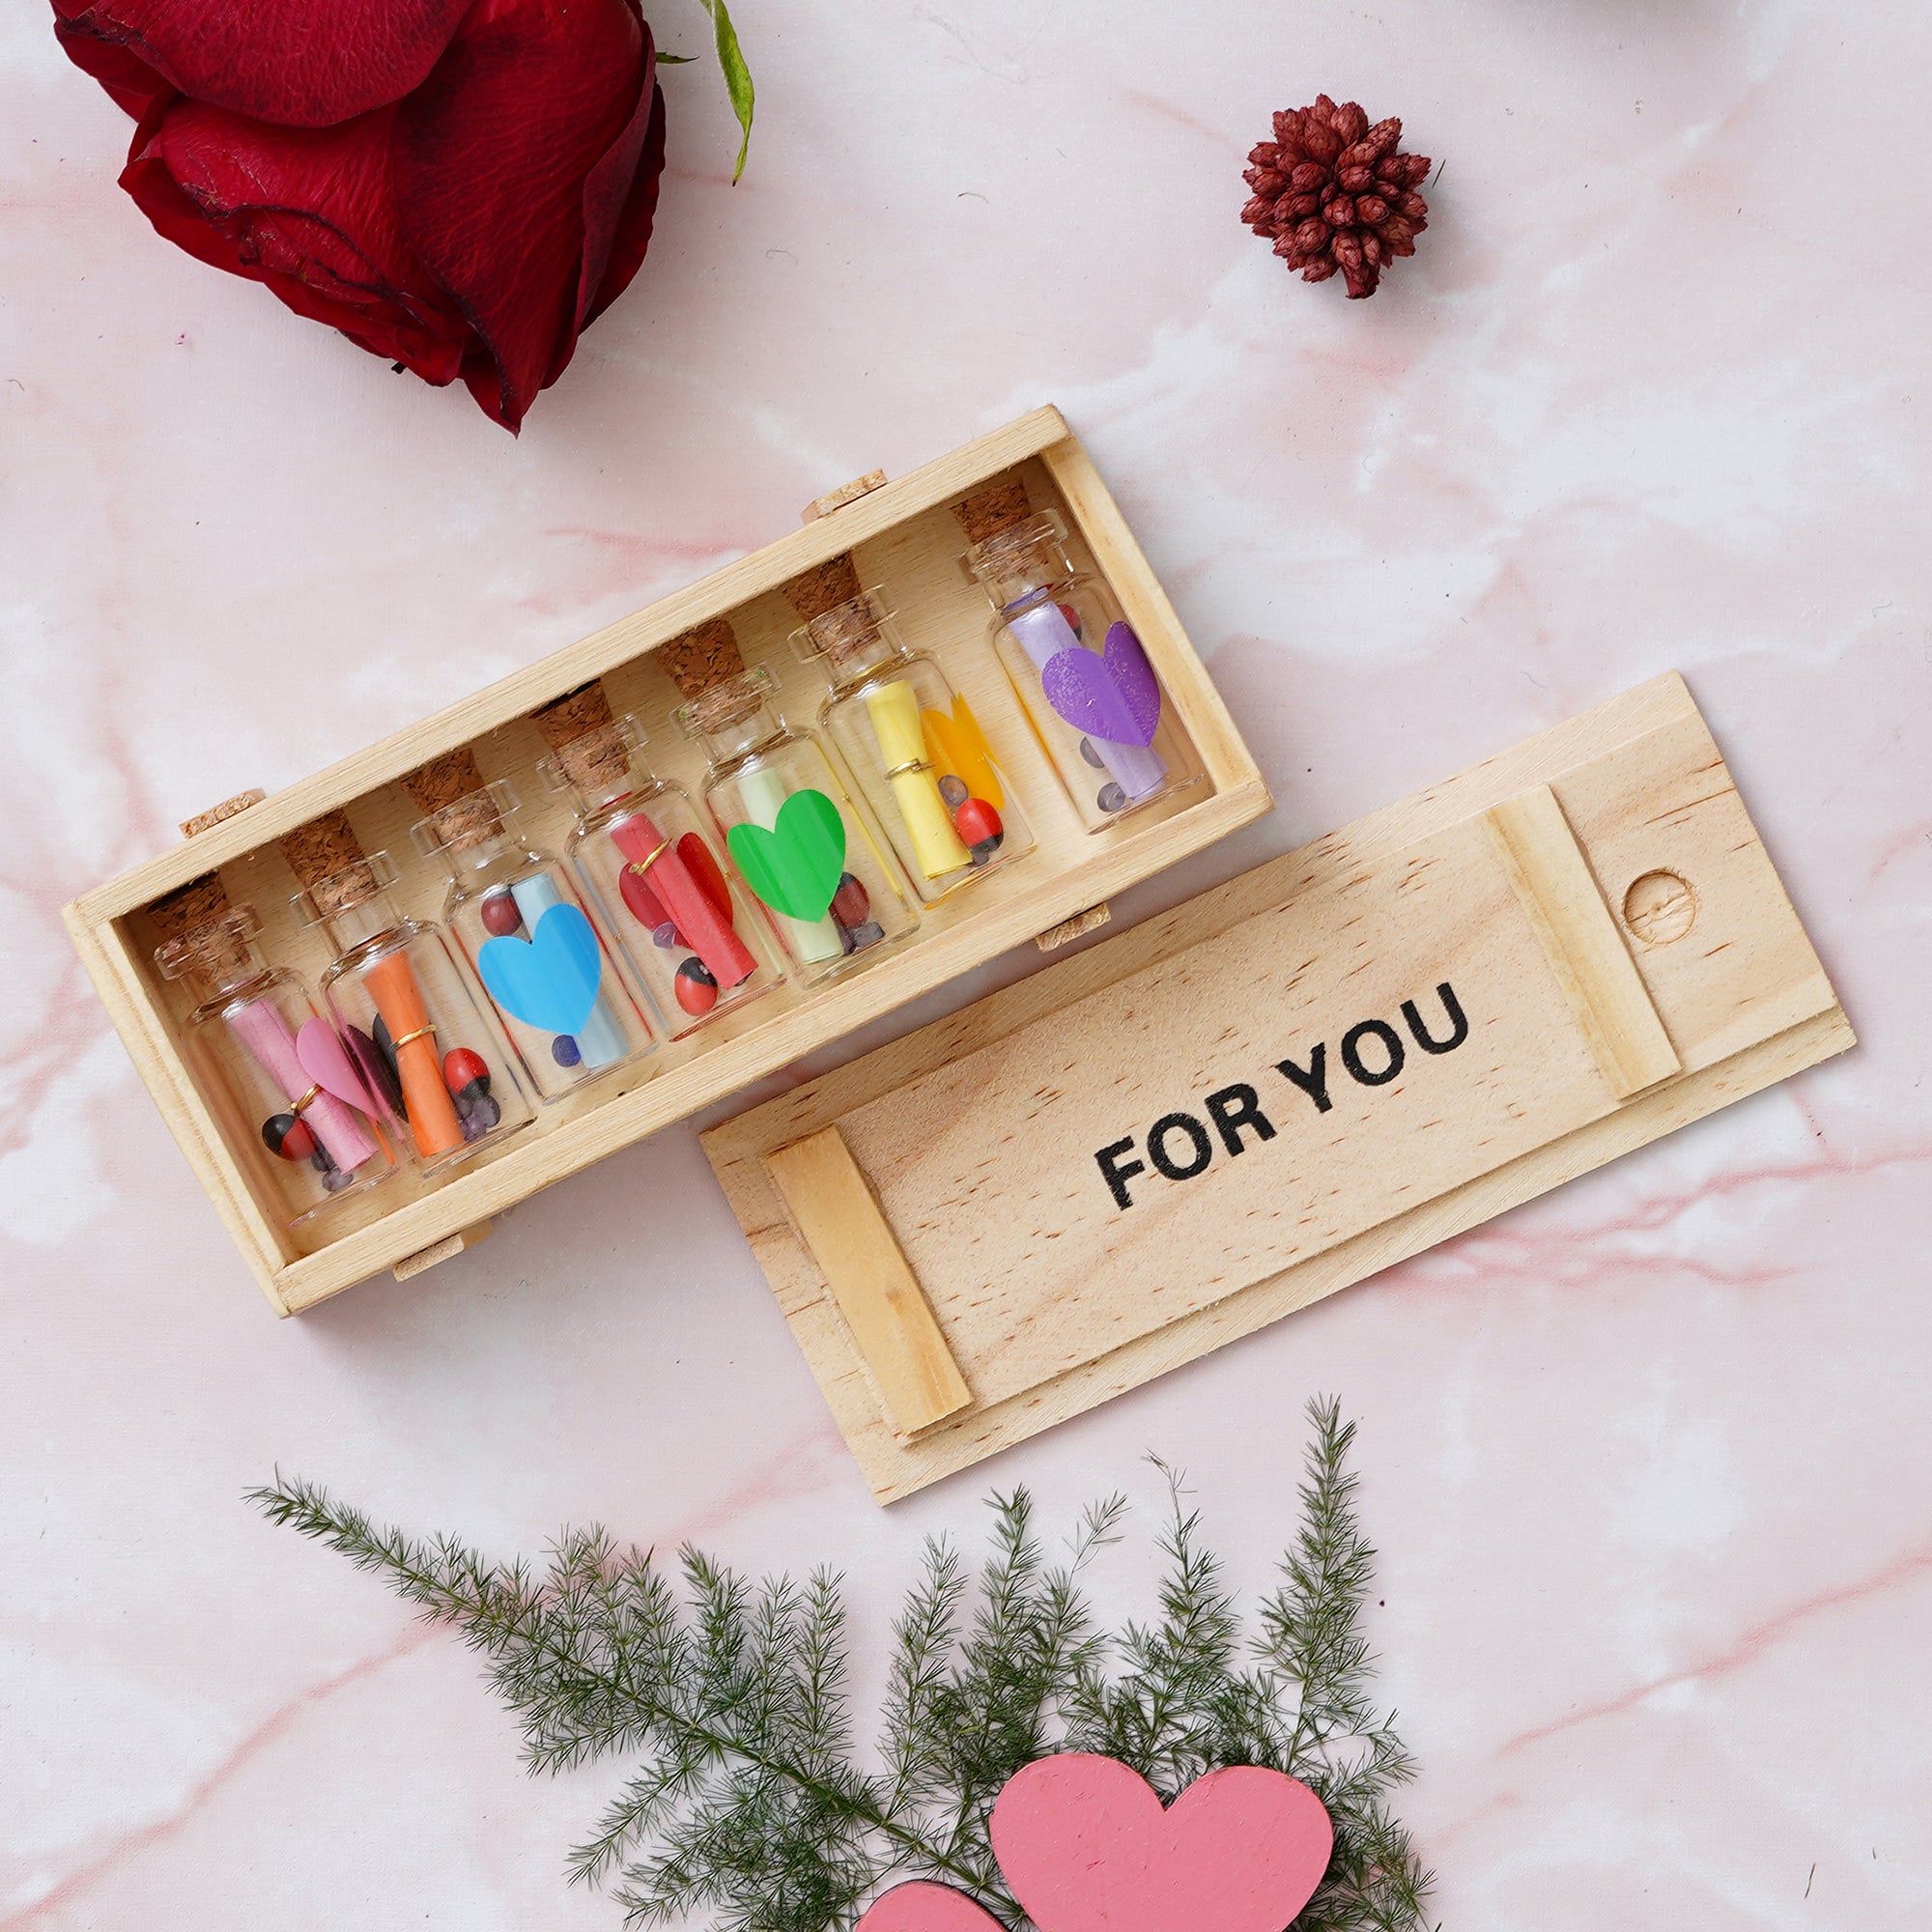 Valentine Combo of Pack of 8 Love Gift Cards, Golden Rose Gift Set, Wooden Box "For You" Message Bottle Set 5